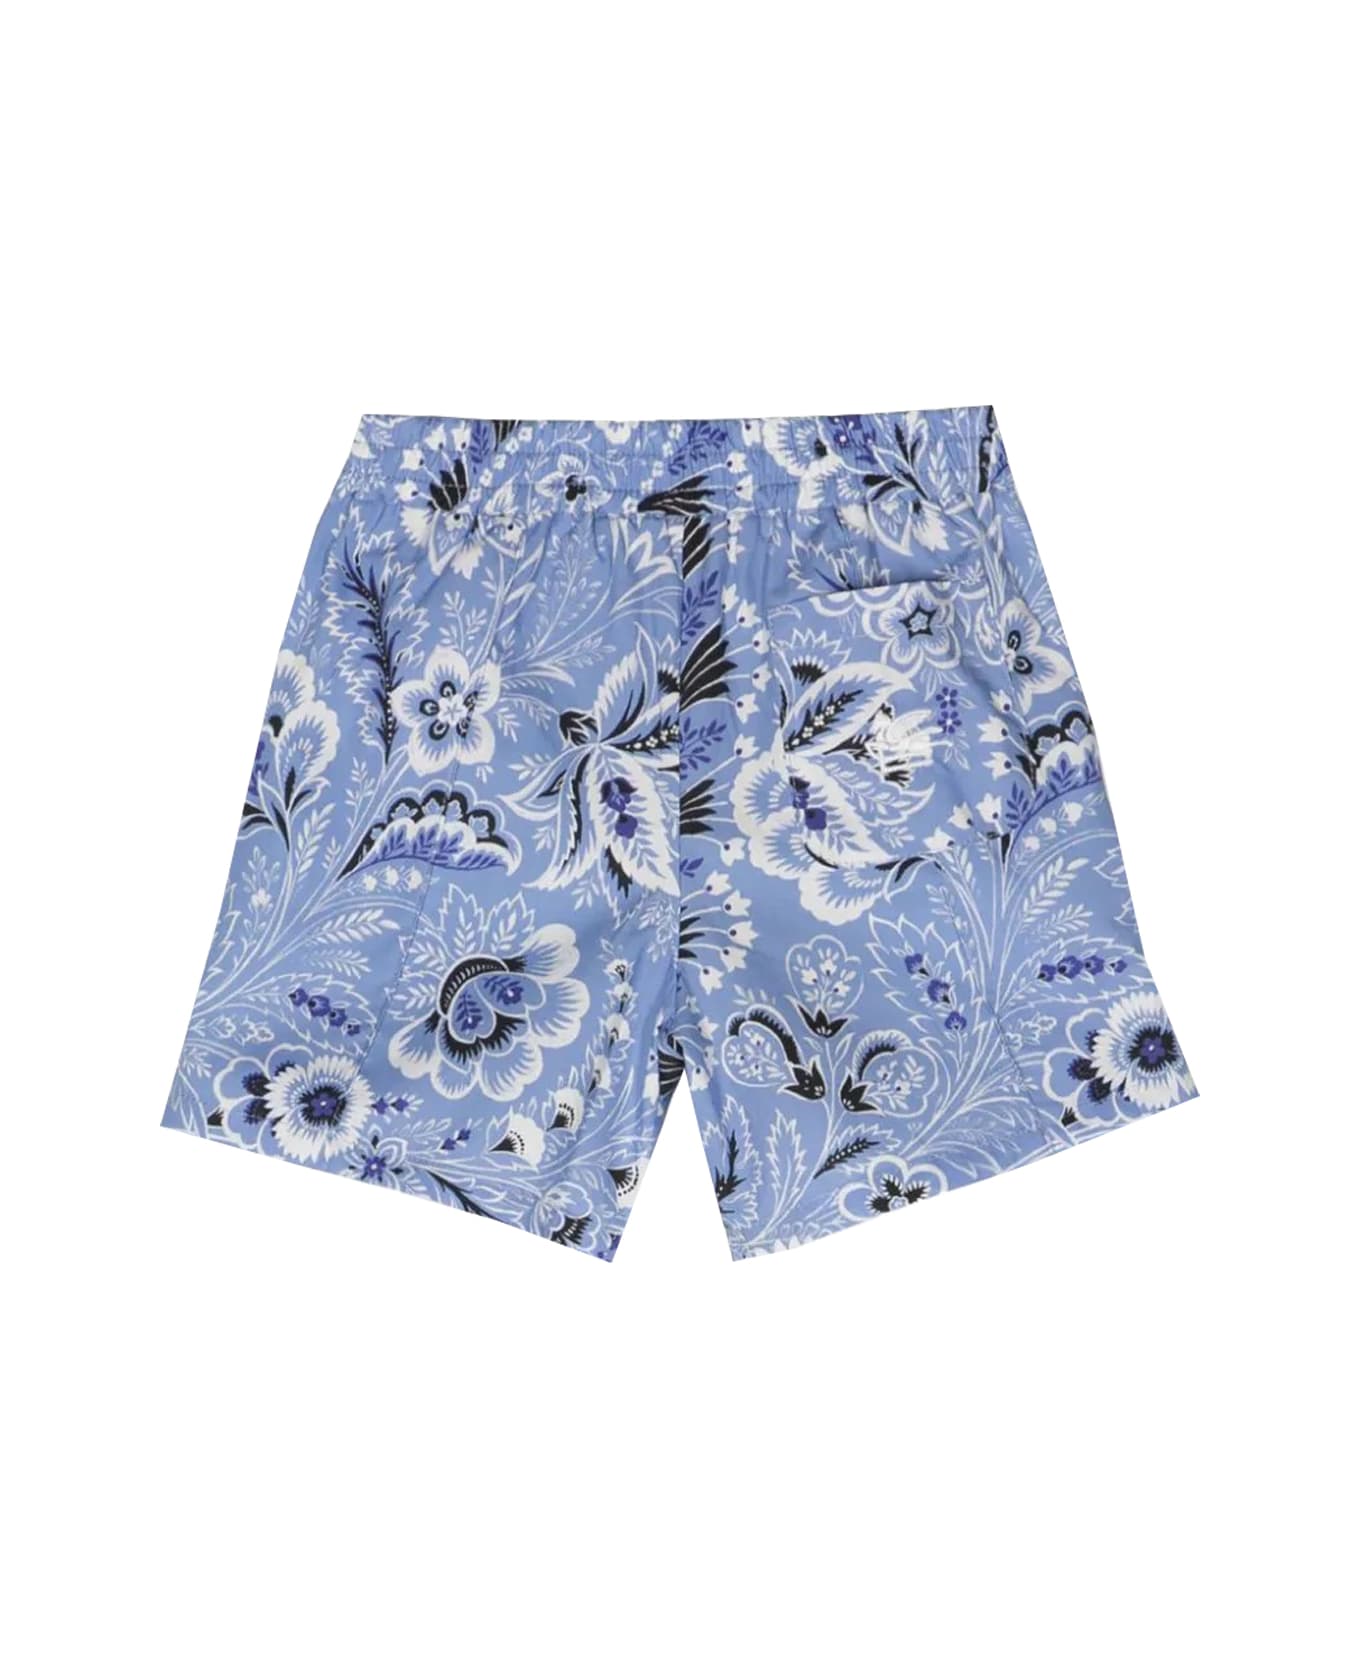 Etro Monochrome Paisley Bermuda Shorts - Light blue